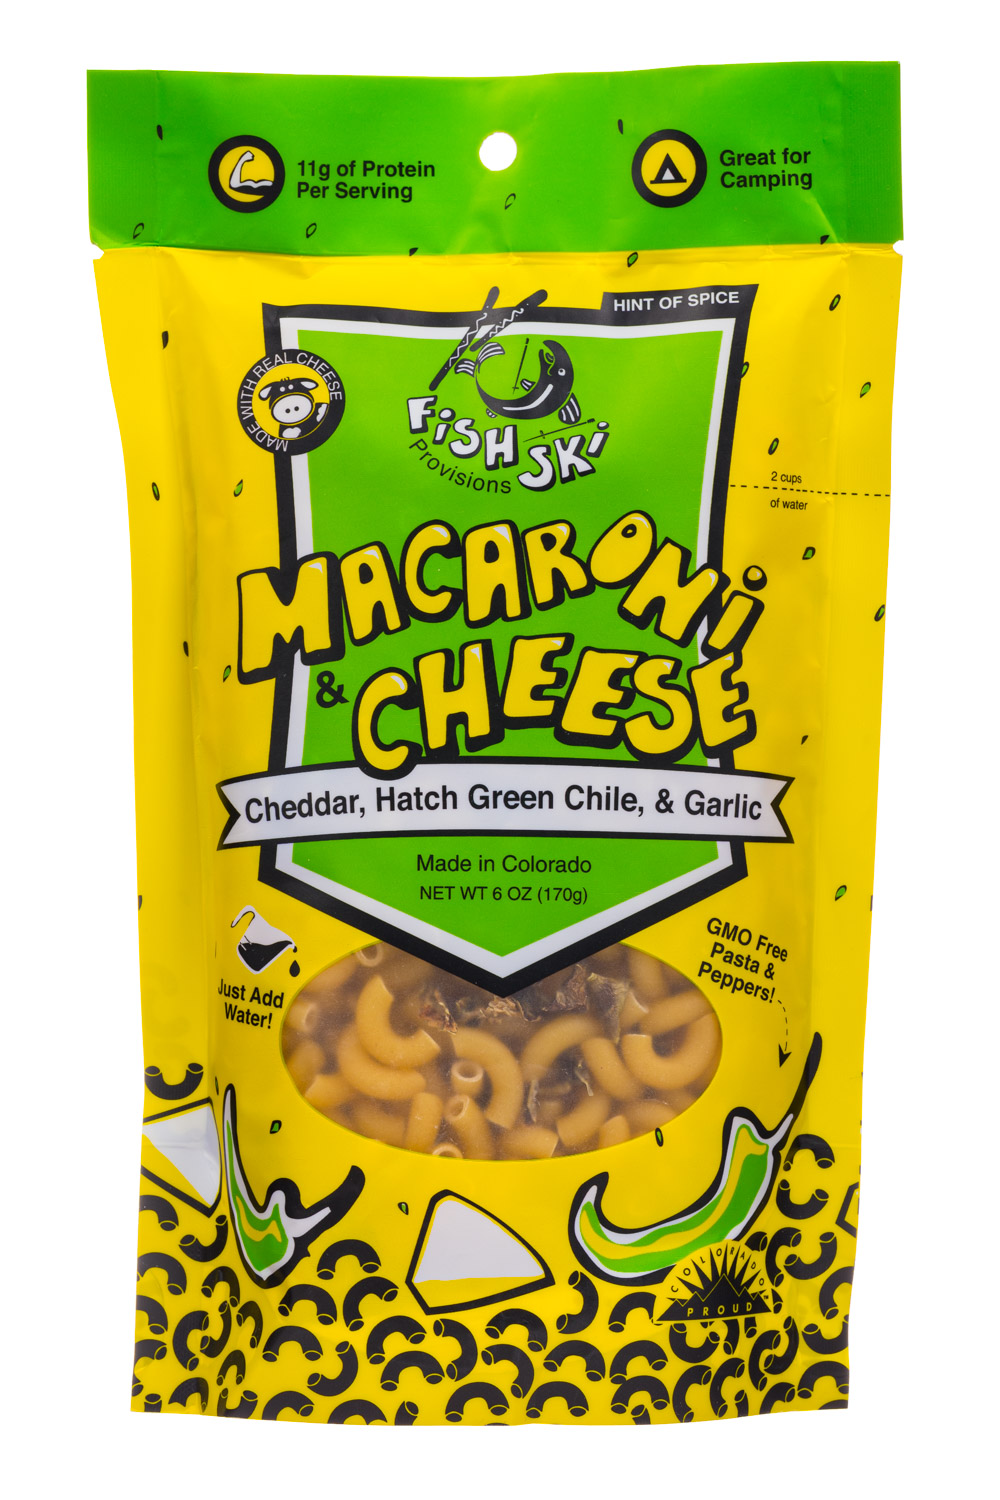 Macaroni & Cheese: Cheddar, Hatch Green Chile & Garlic